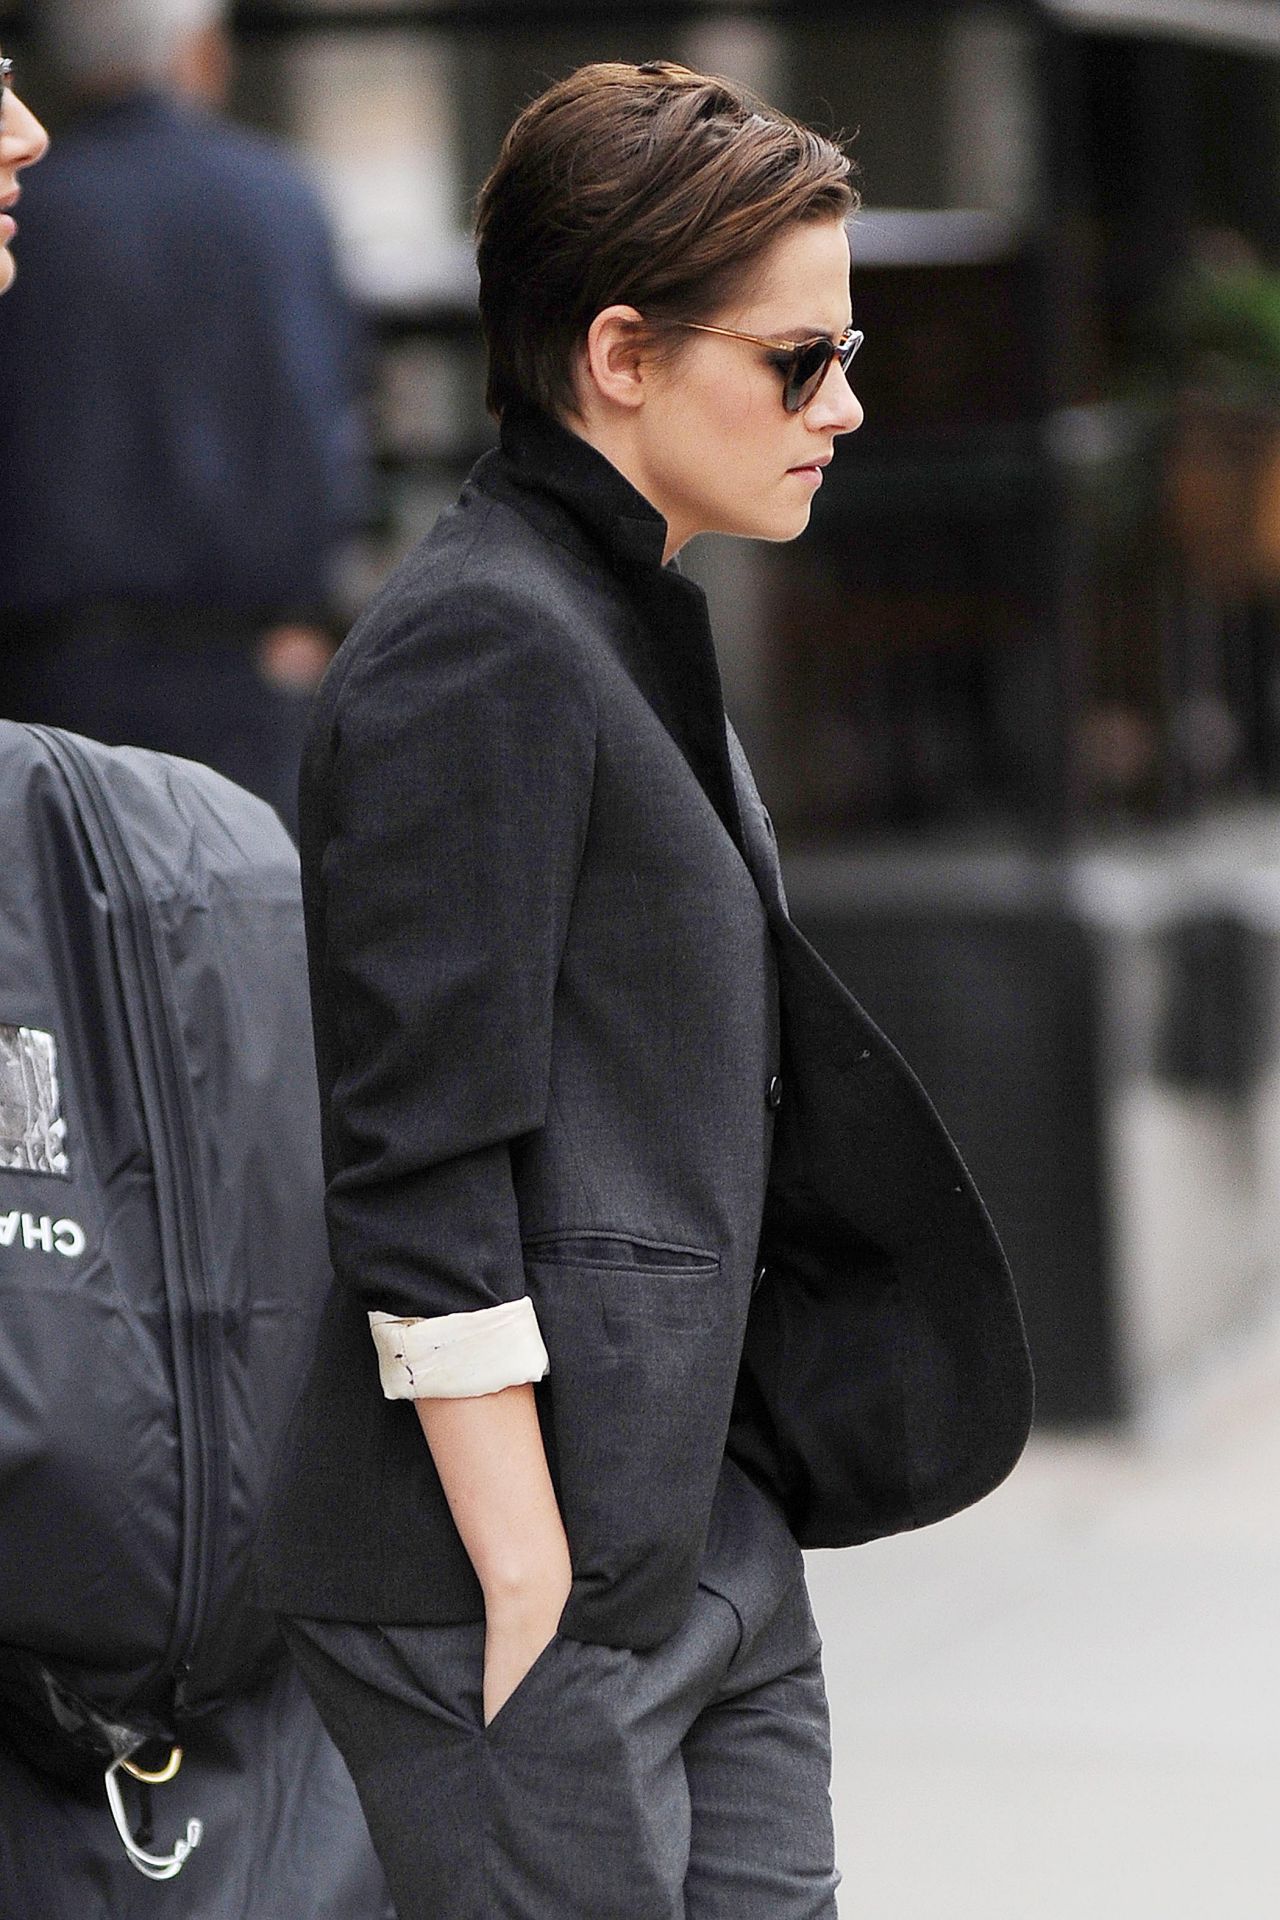 Kristen Stewart Style - Leaving Her Hotel in NYC - October 2014 ...